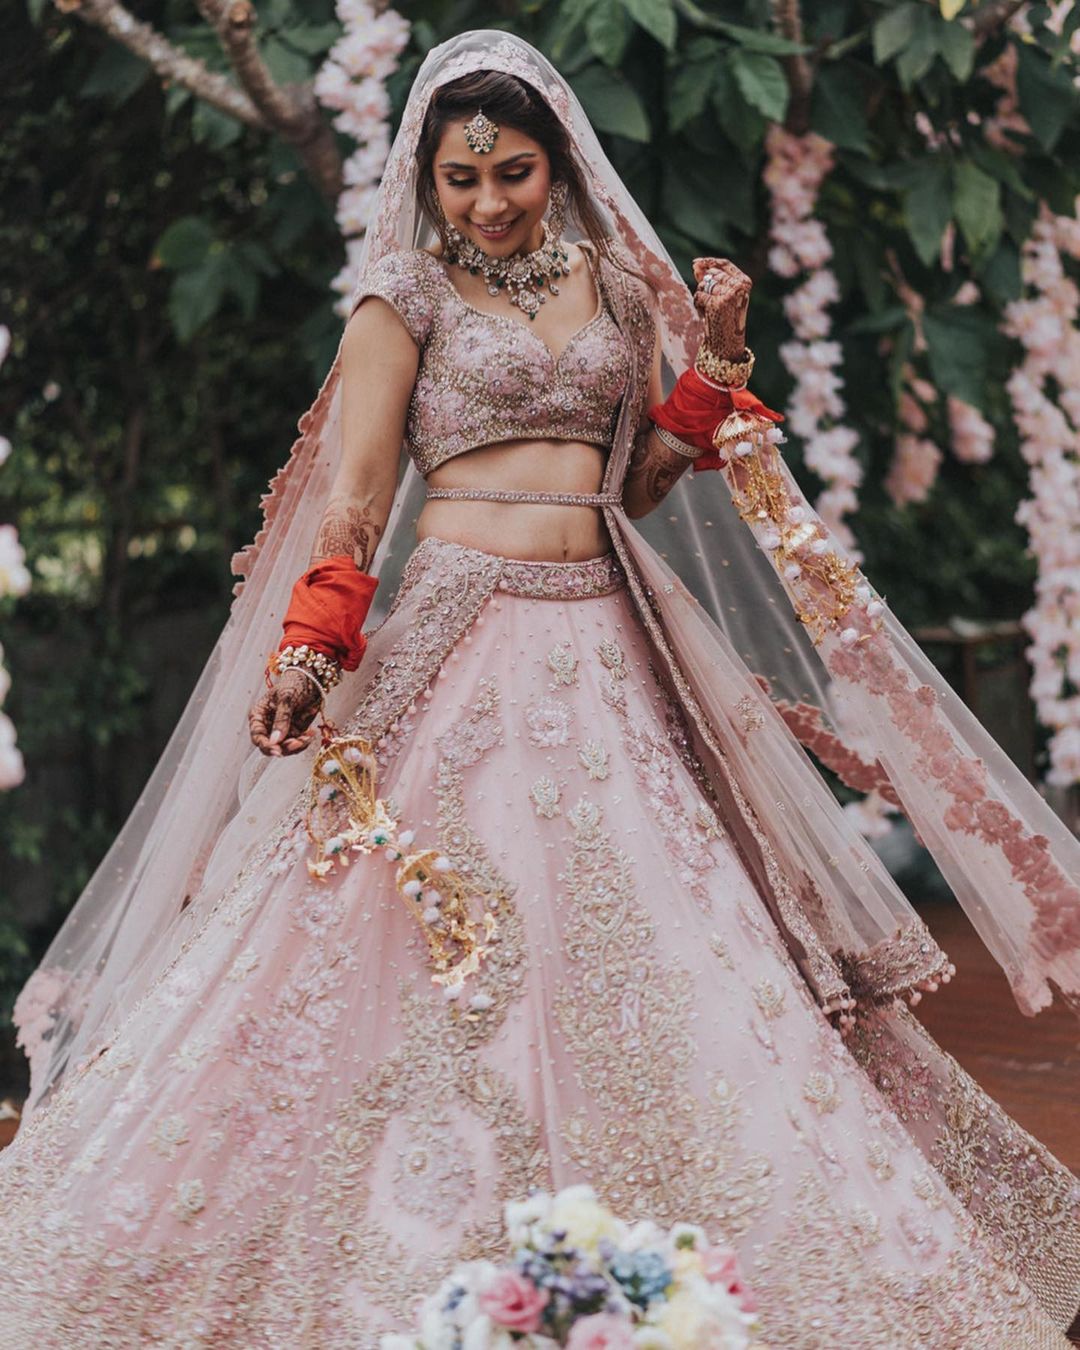 The Purplish-Pink Kind Of Lehenga Shades Of Bridal Pink Lehenga For Her Wedding Day